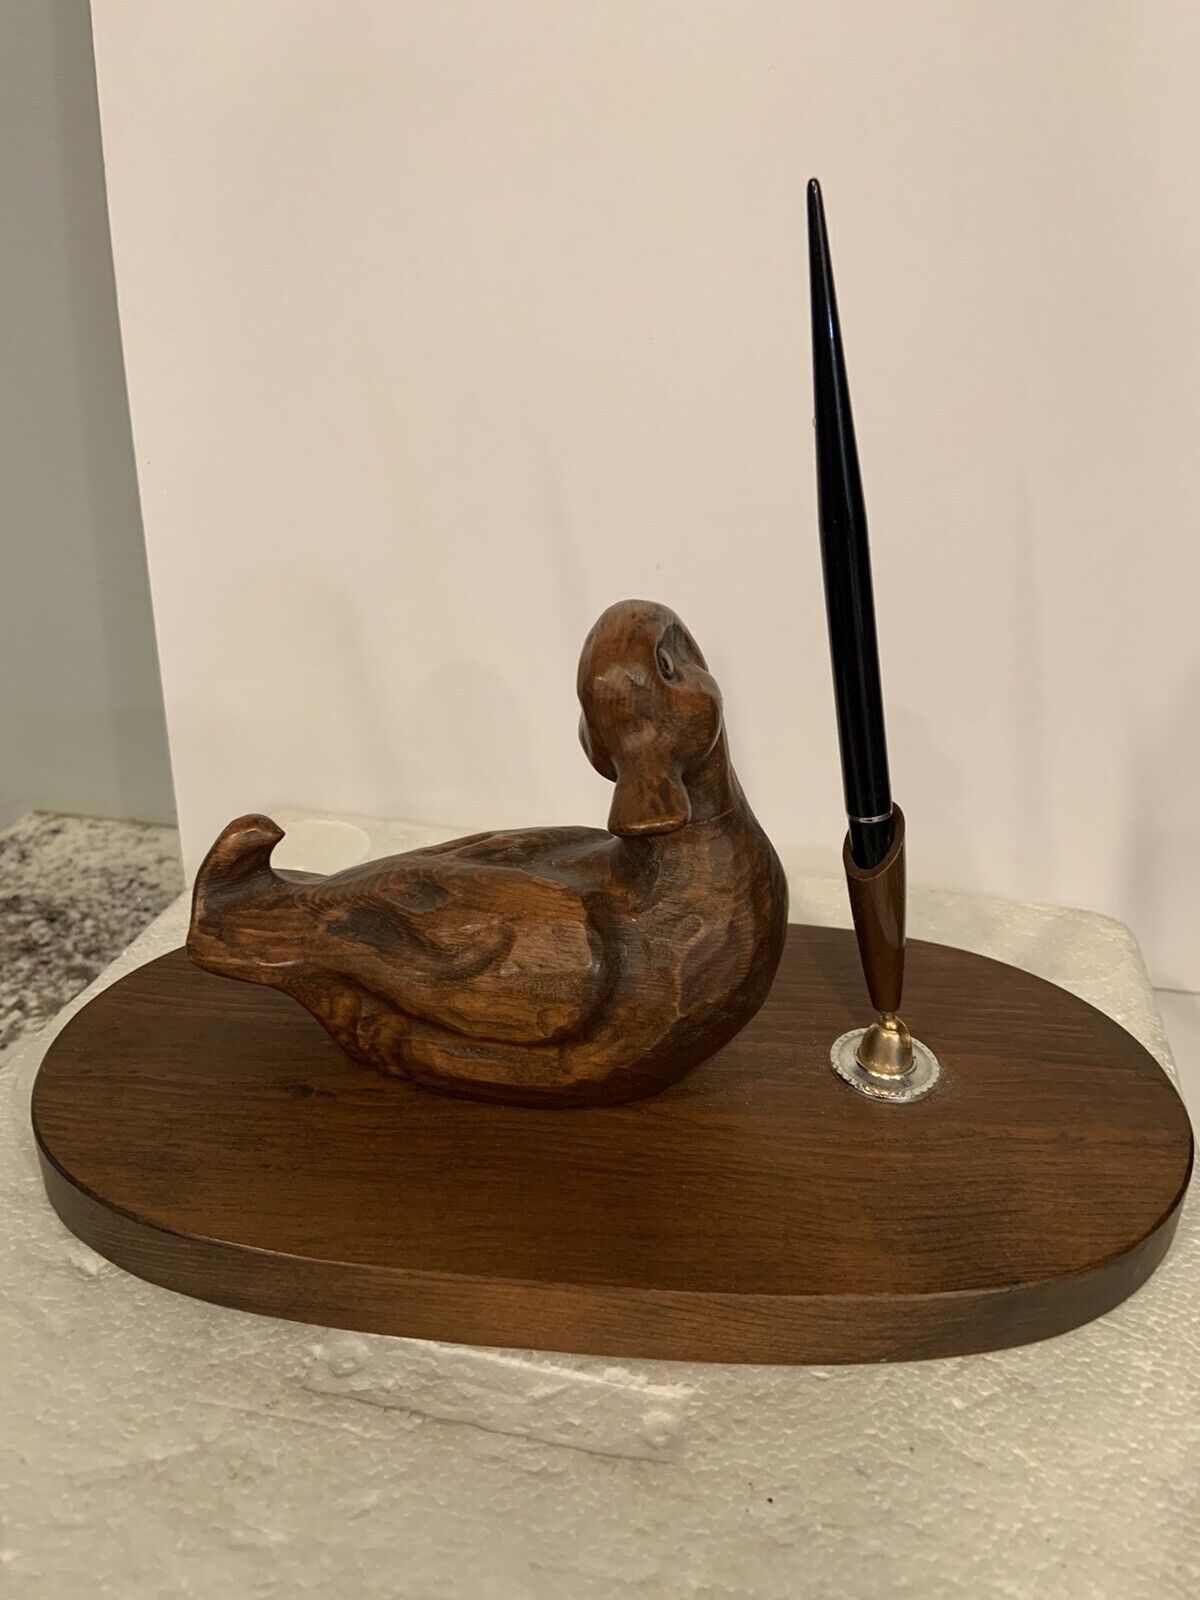 Vtg Wooden Duck Desk Pen Holder Hand Carved By Alt Weisskopf German Artist W/Pen